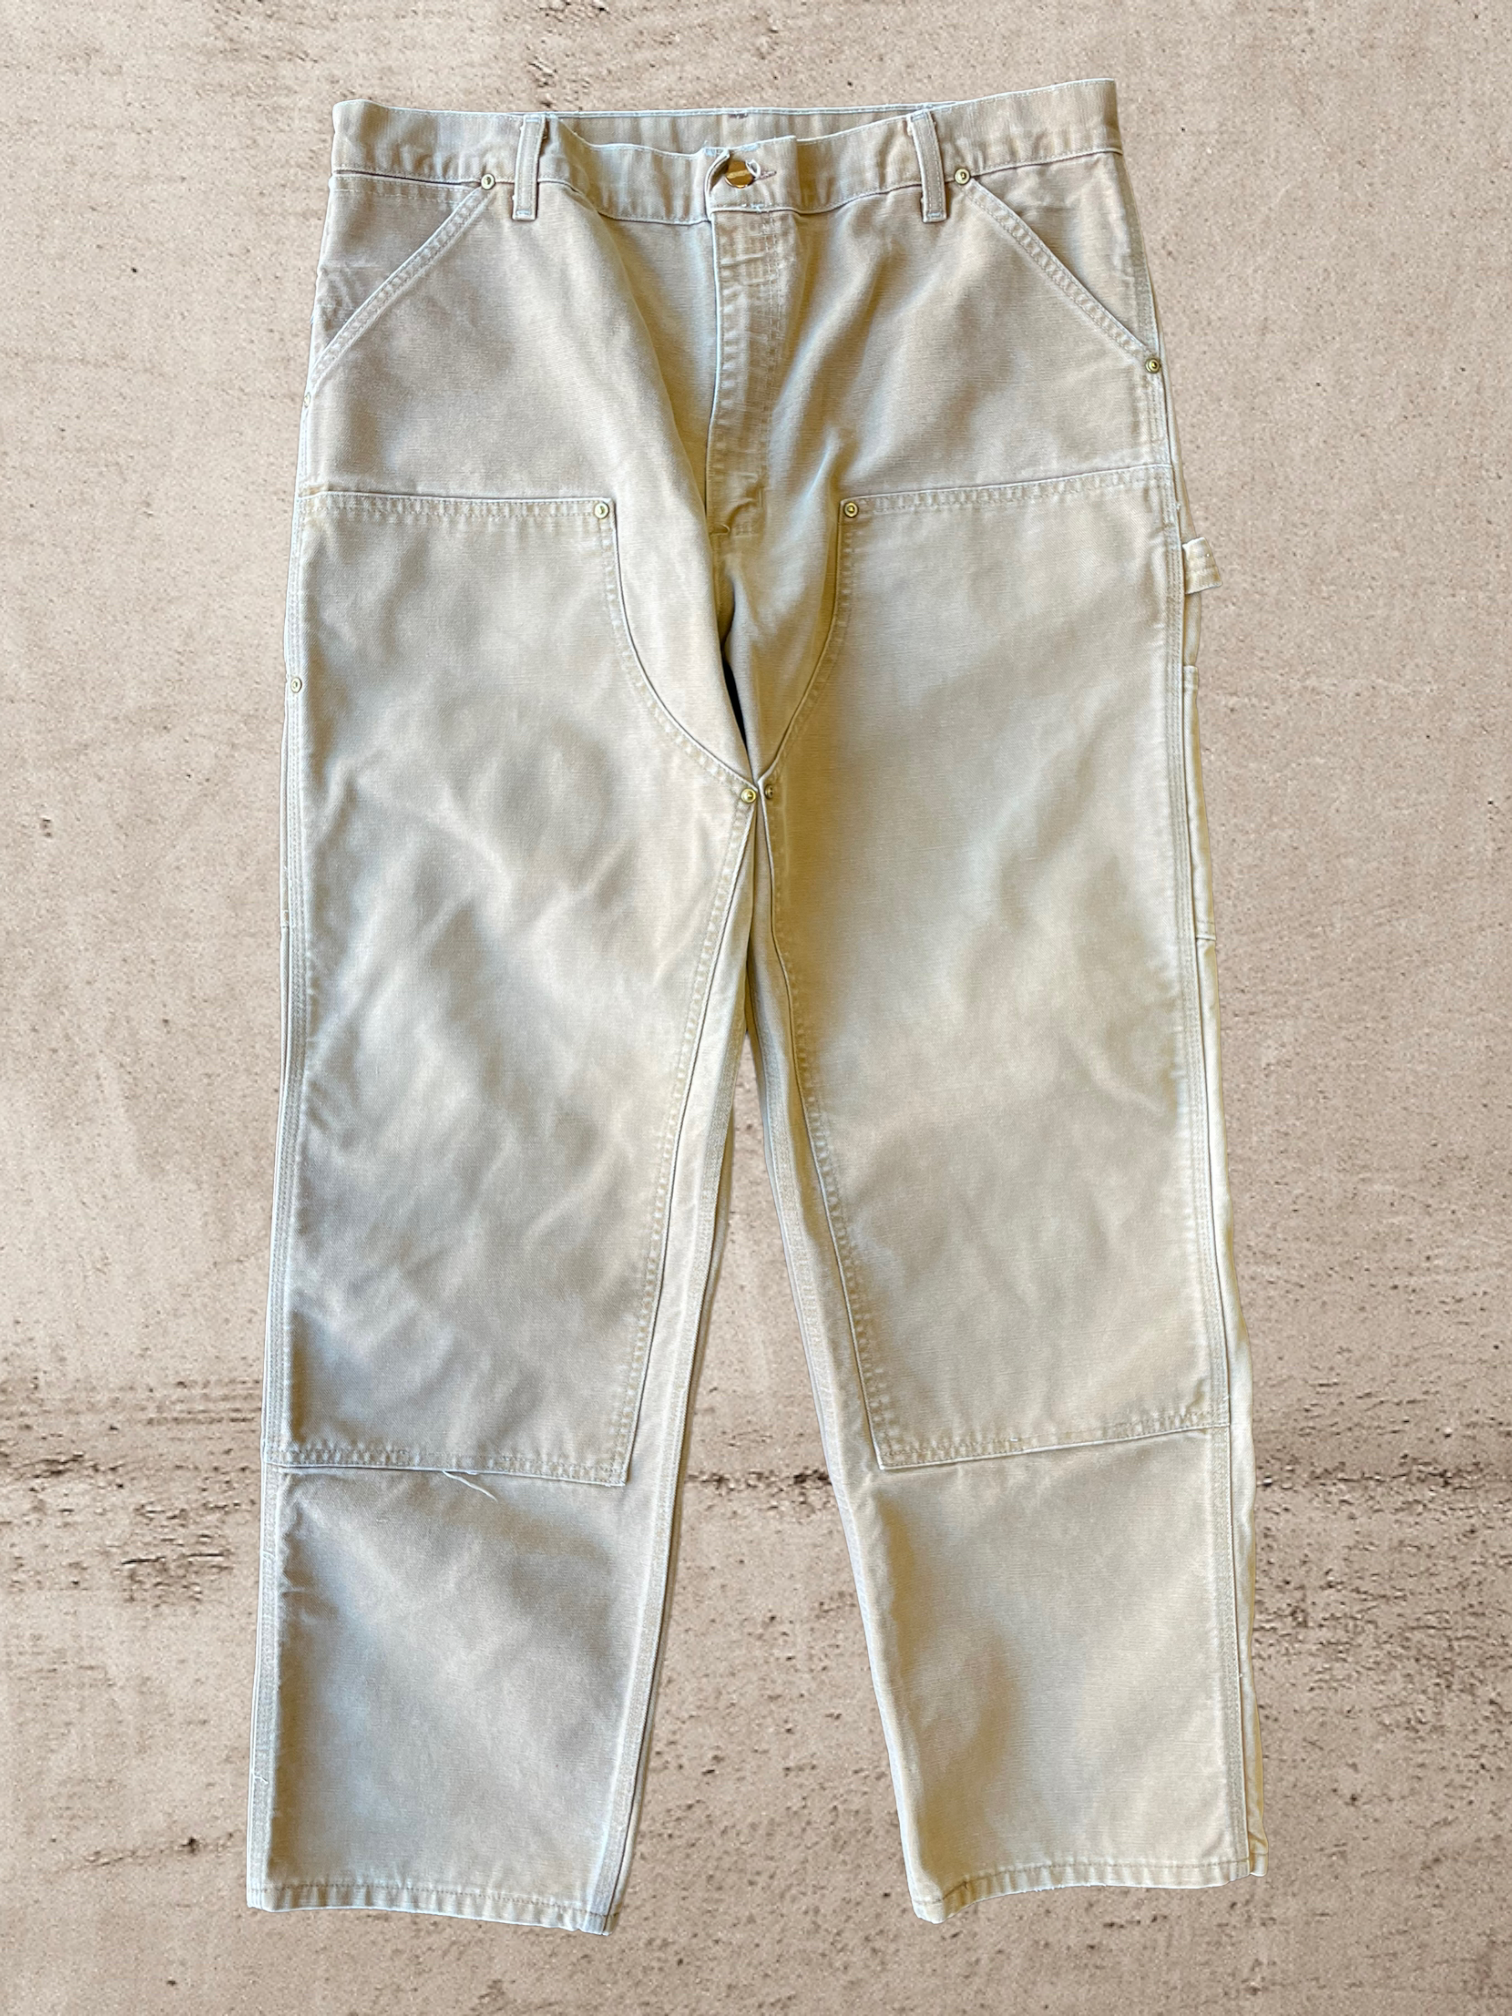 Vintage Carhartt Double Knee Pants - 36x30